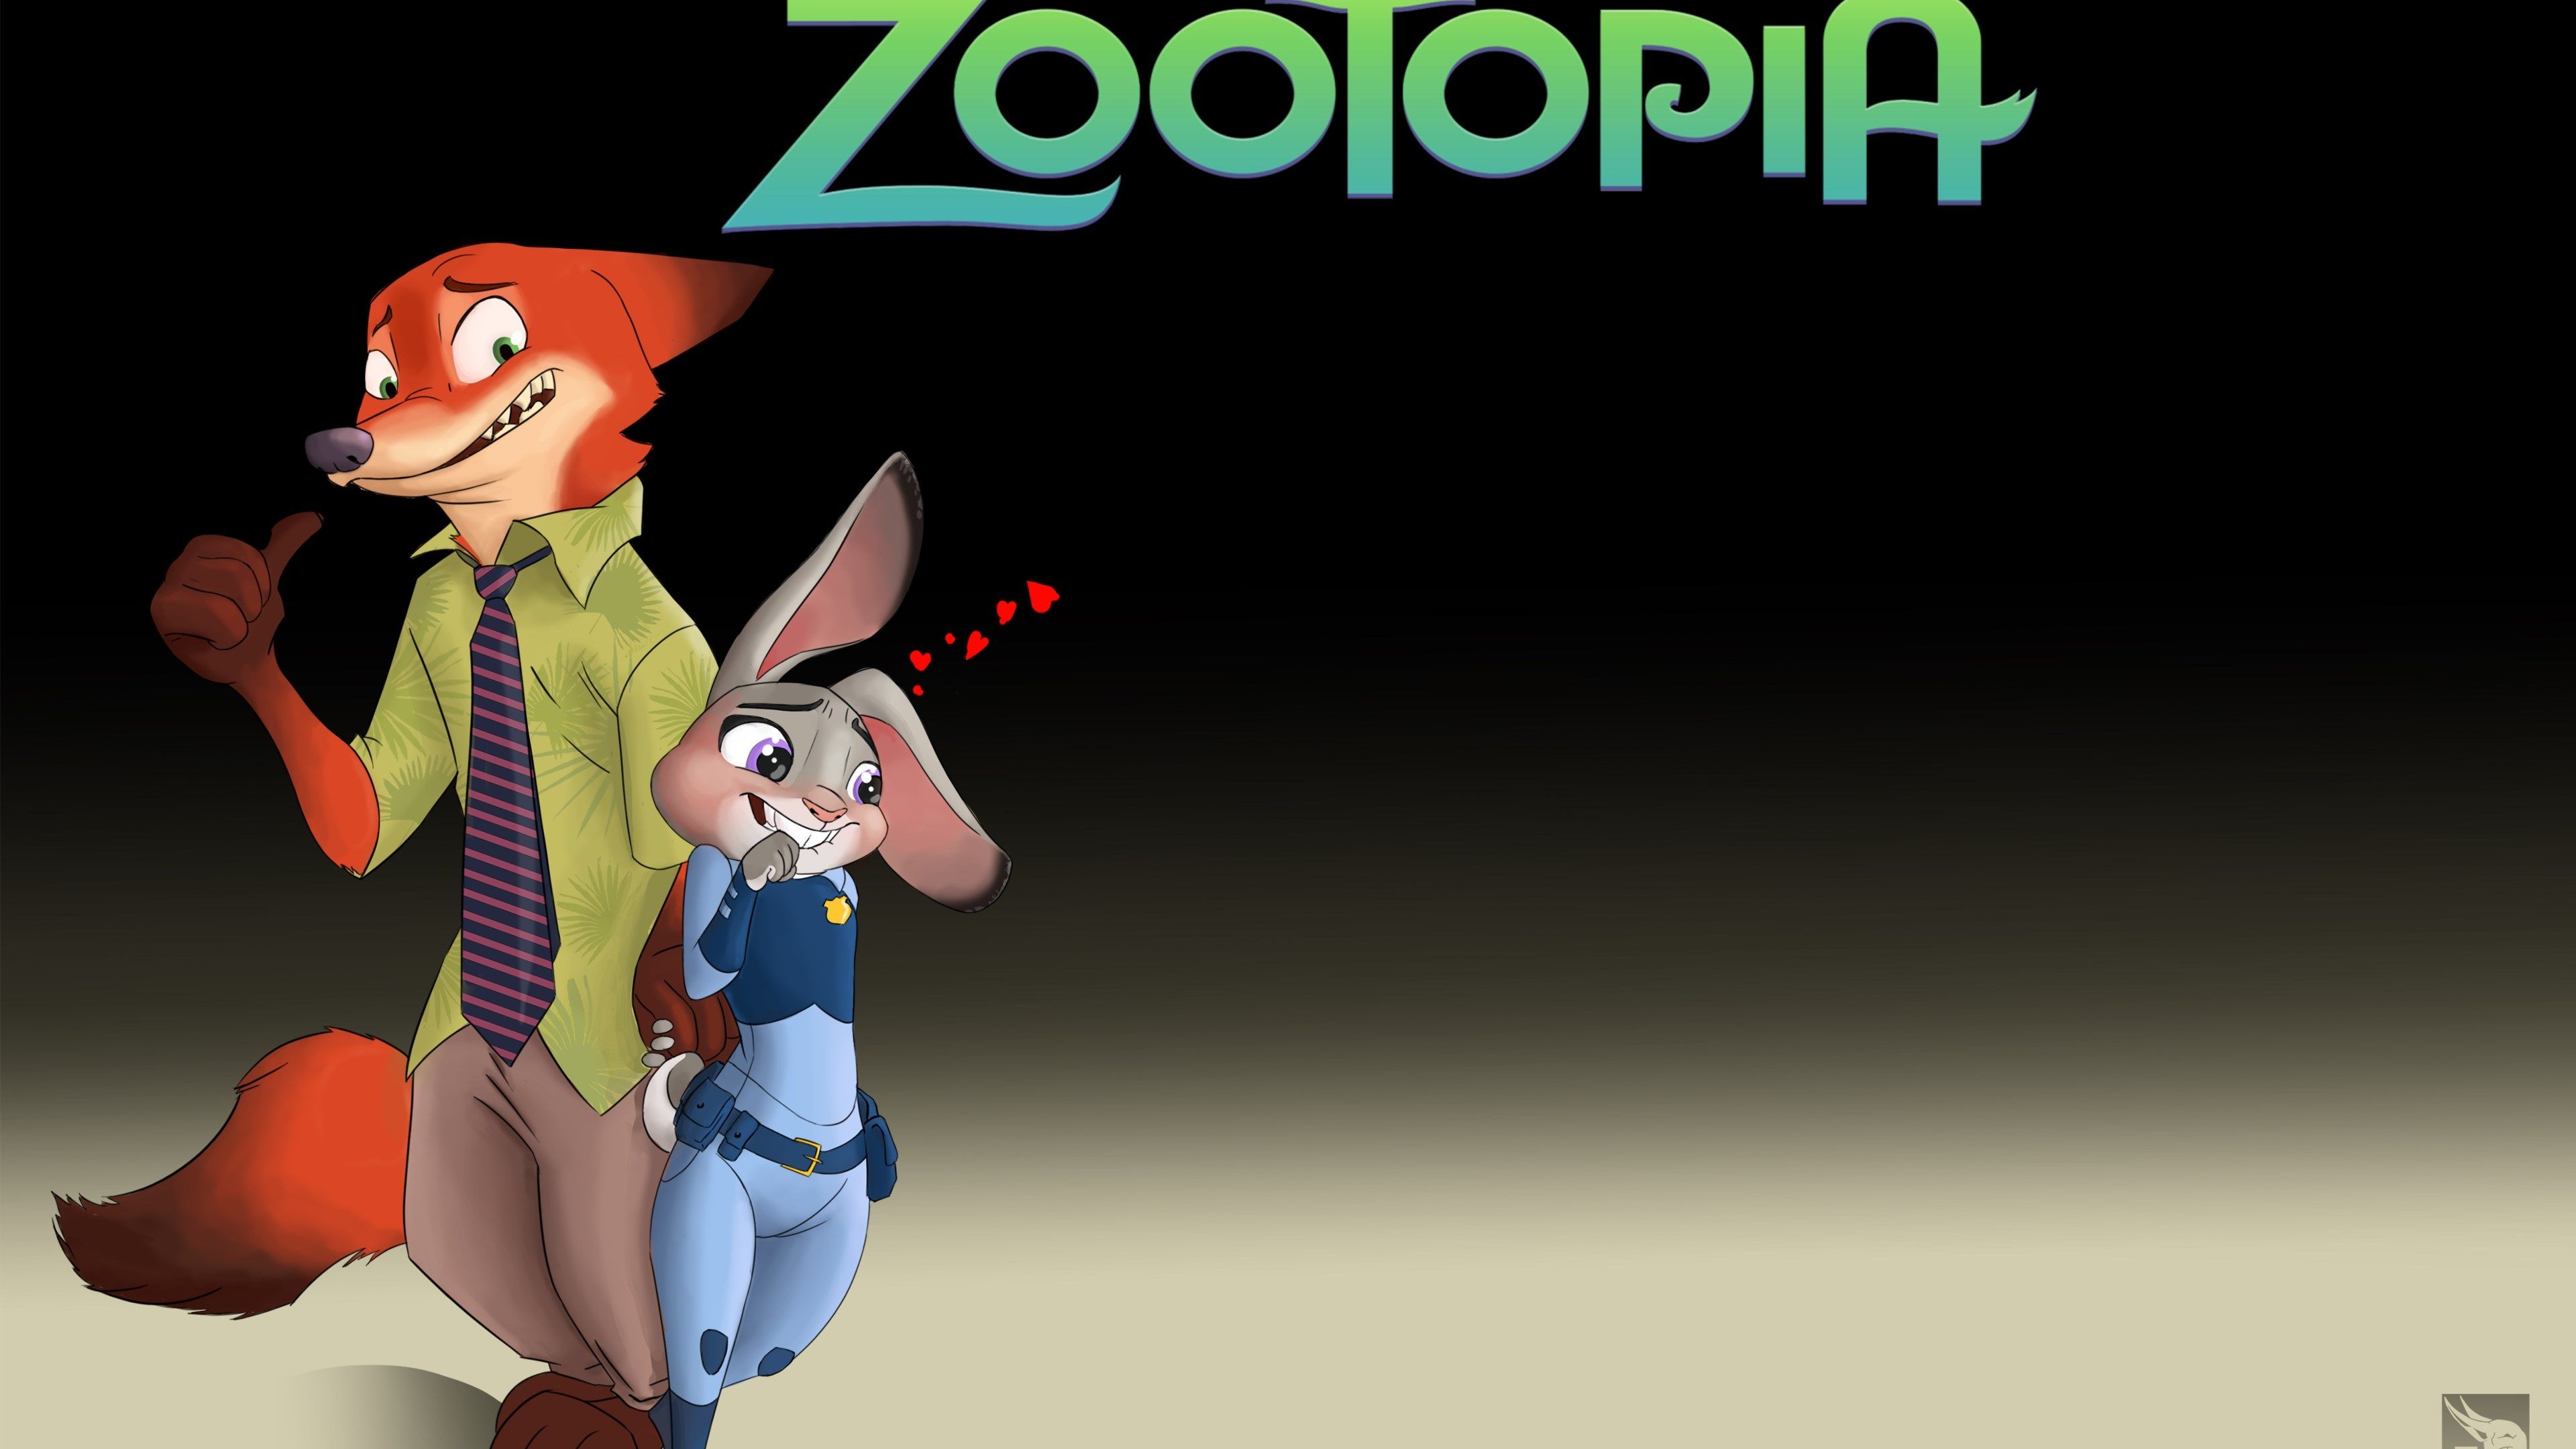 zootopia 4k cool wallpaper for desktop. Zootopia